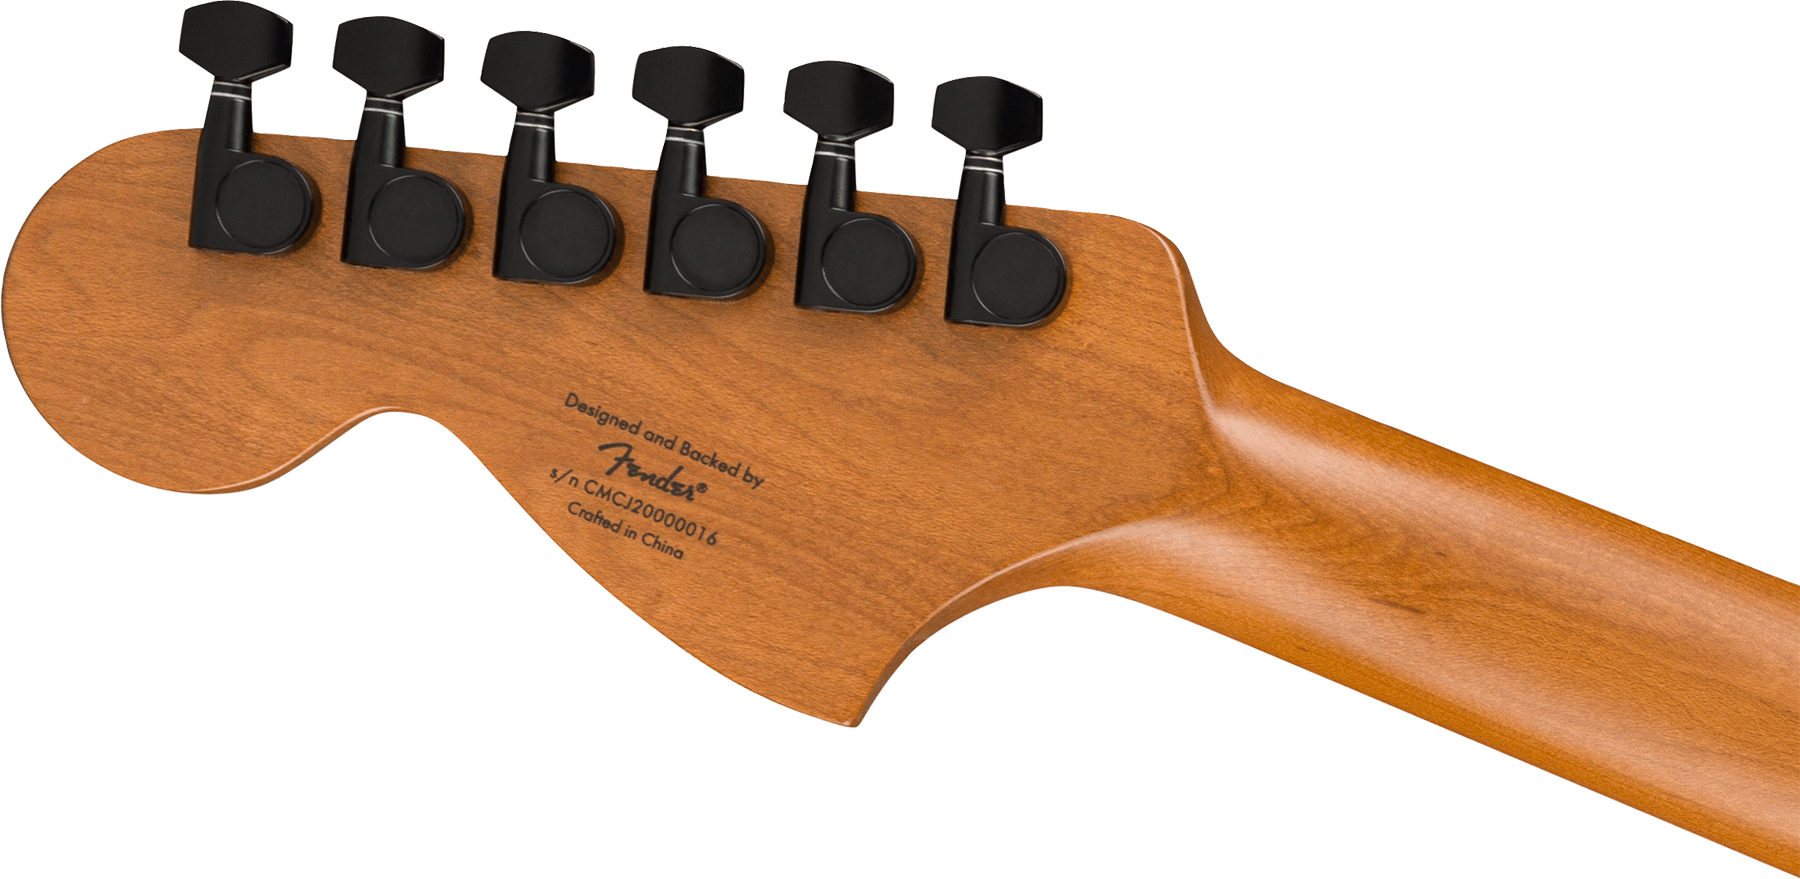 Squier Strat Contemporary Special Sss Trem Mn - Black - Str shape electric guitar - Variation 3